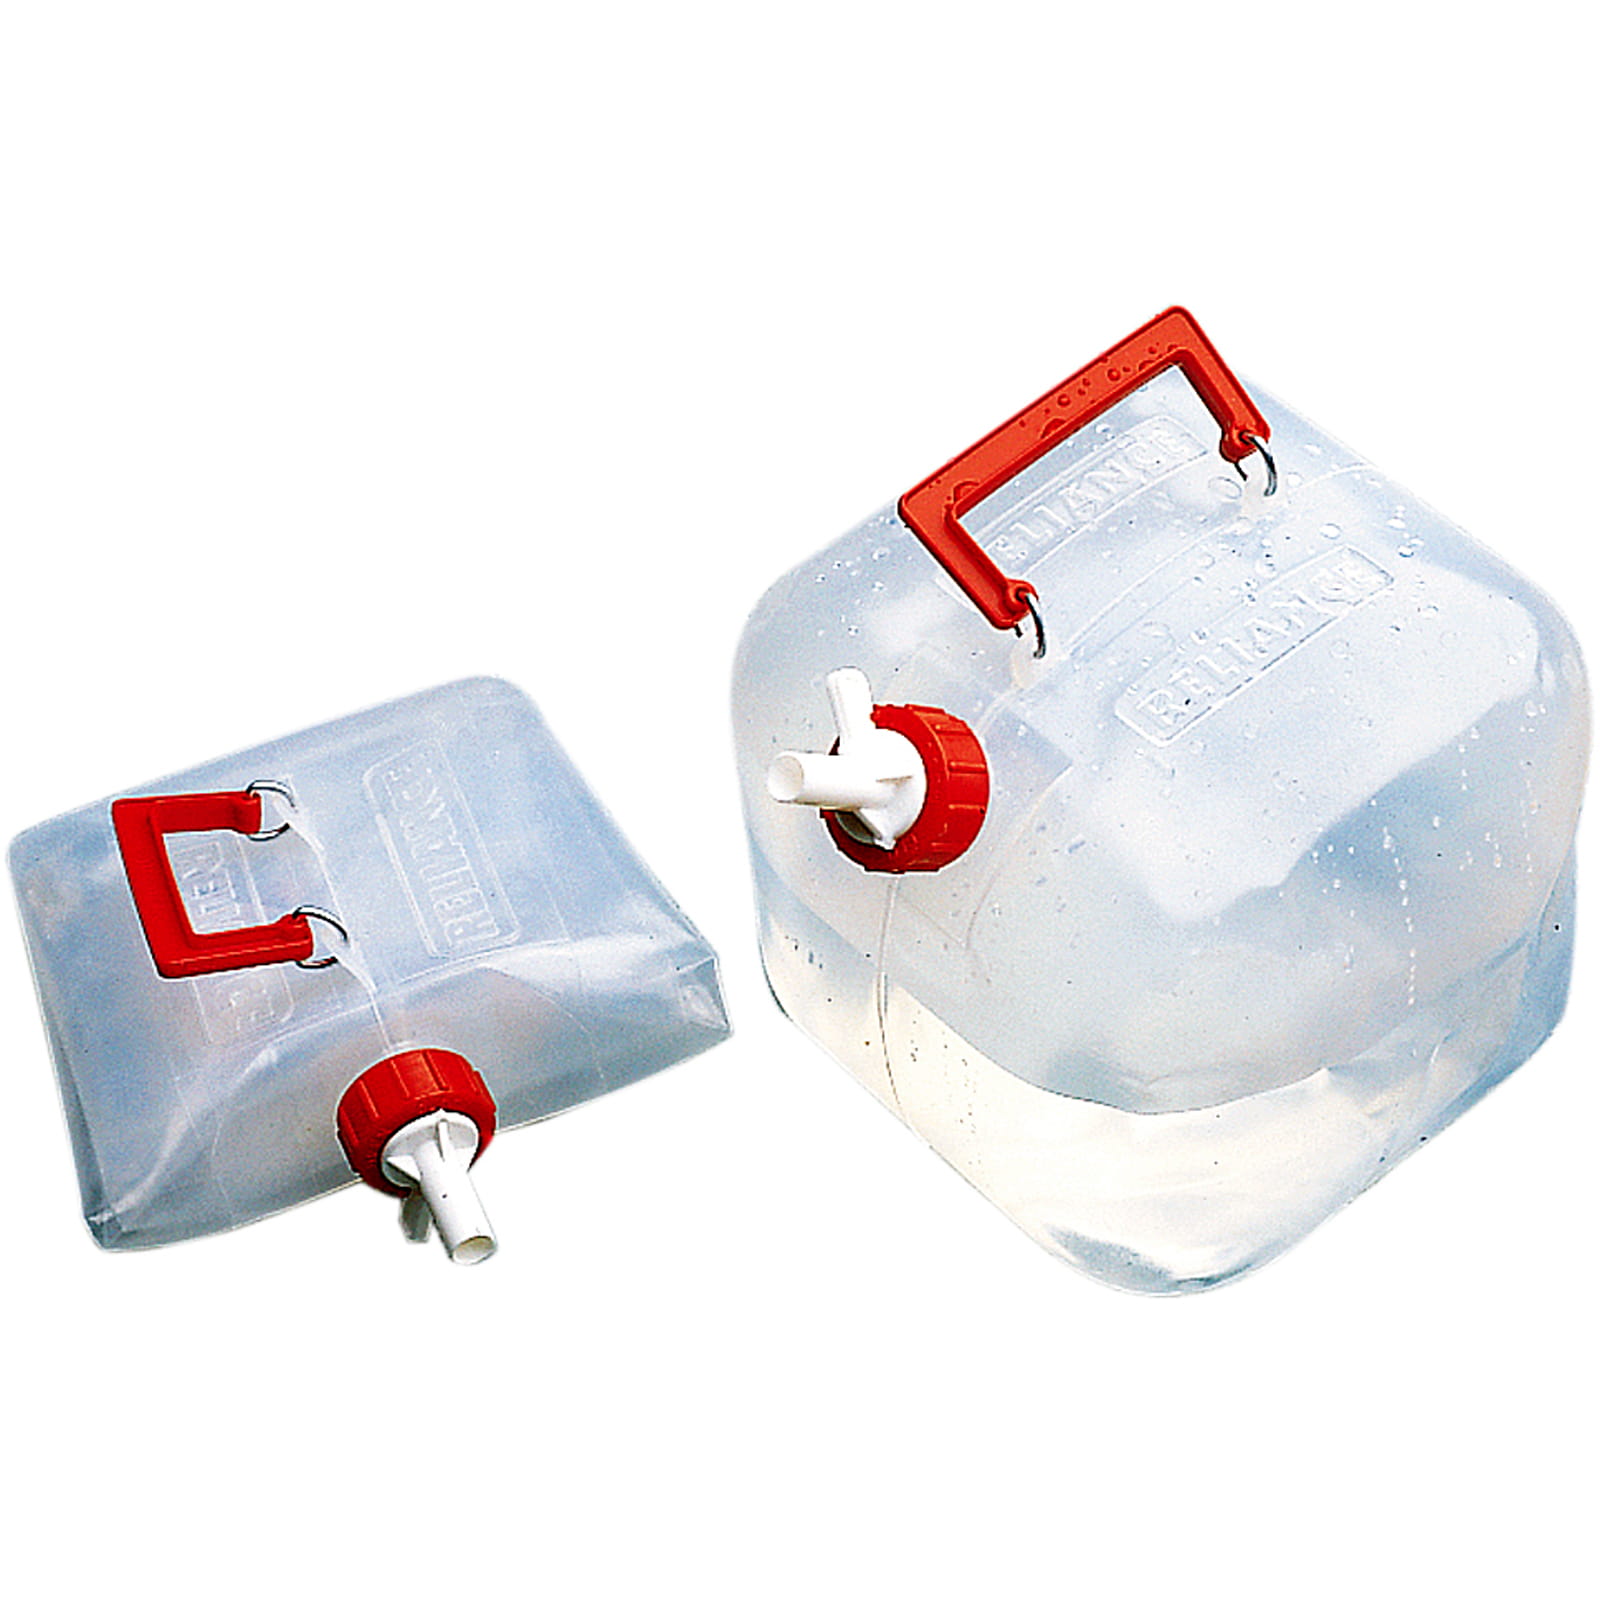 Reliance Faltkanister - 10 Liter Wasserkanister online kaufen